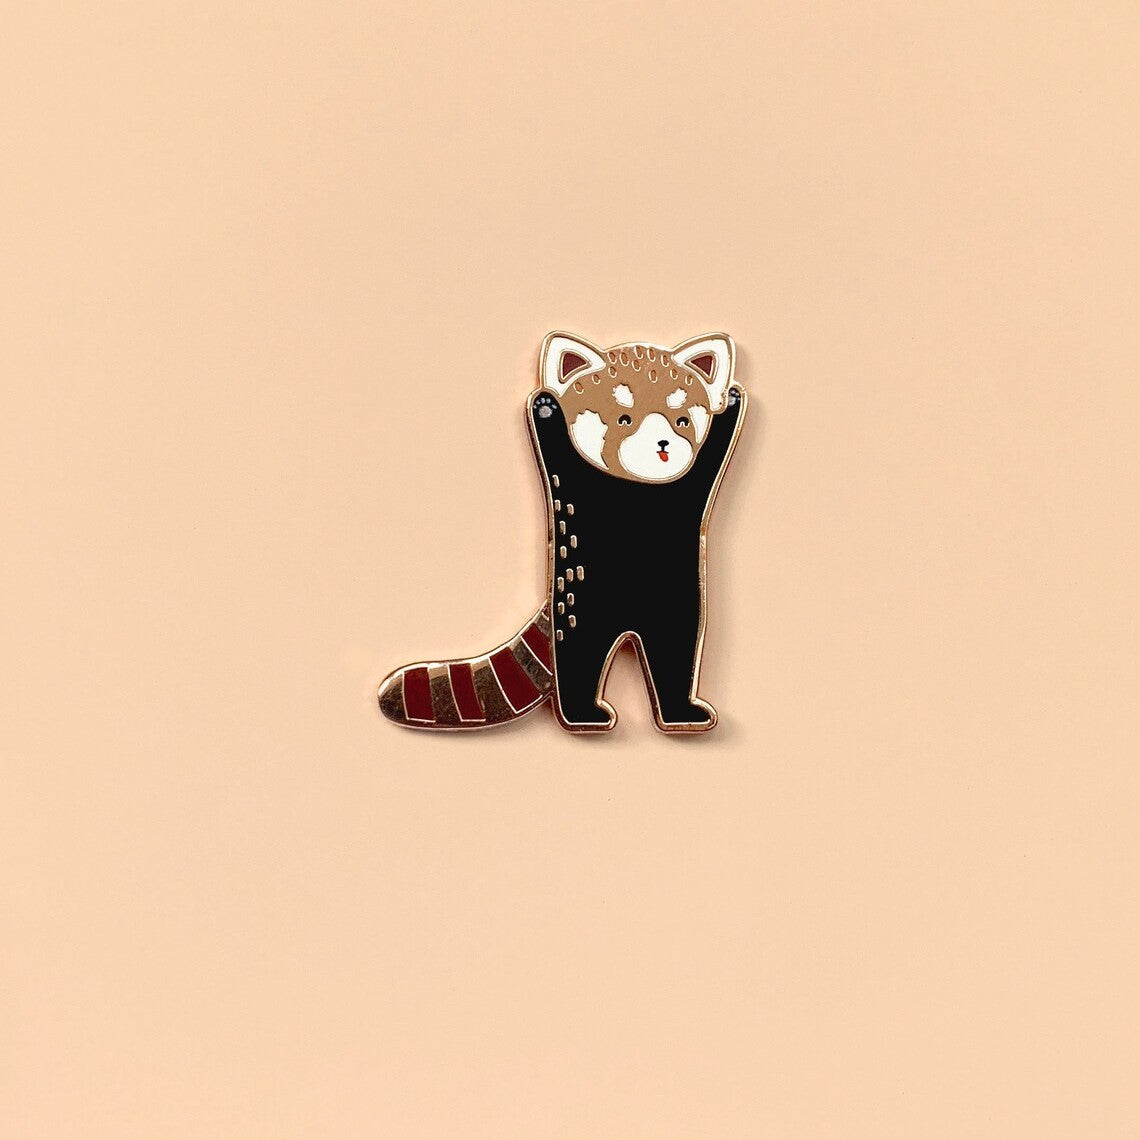 Cheeky Red Panda Enamel Pin Badge